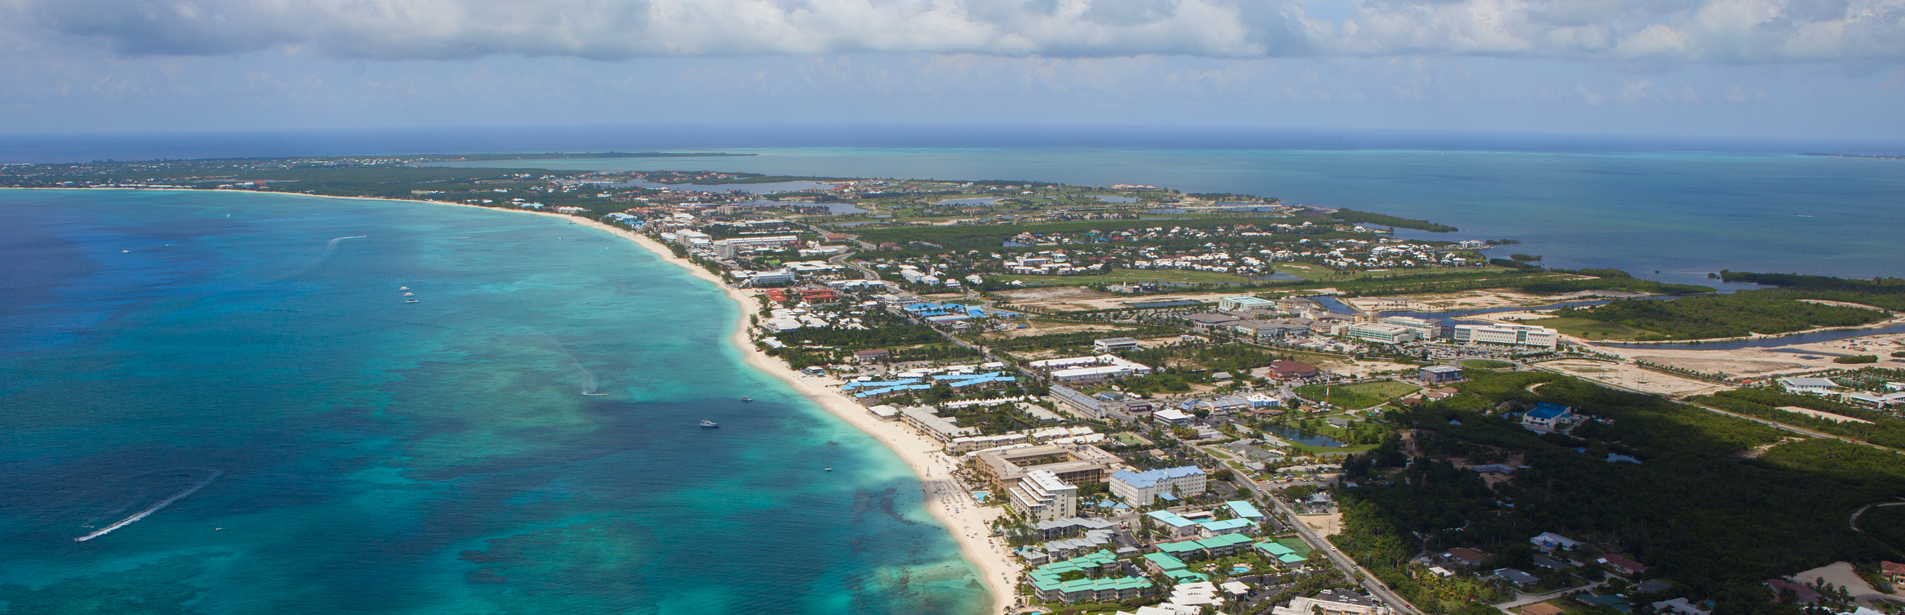 grand cayman cayman islands